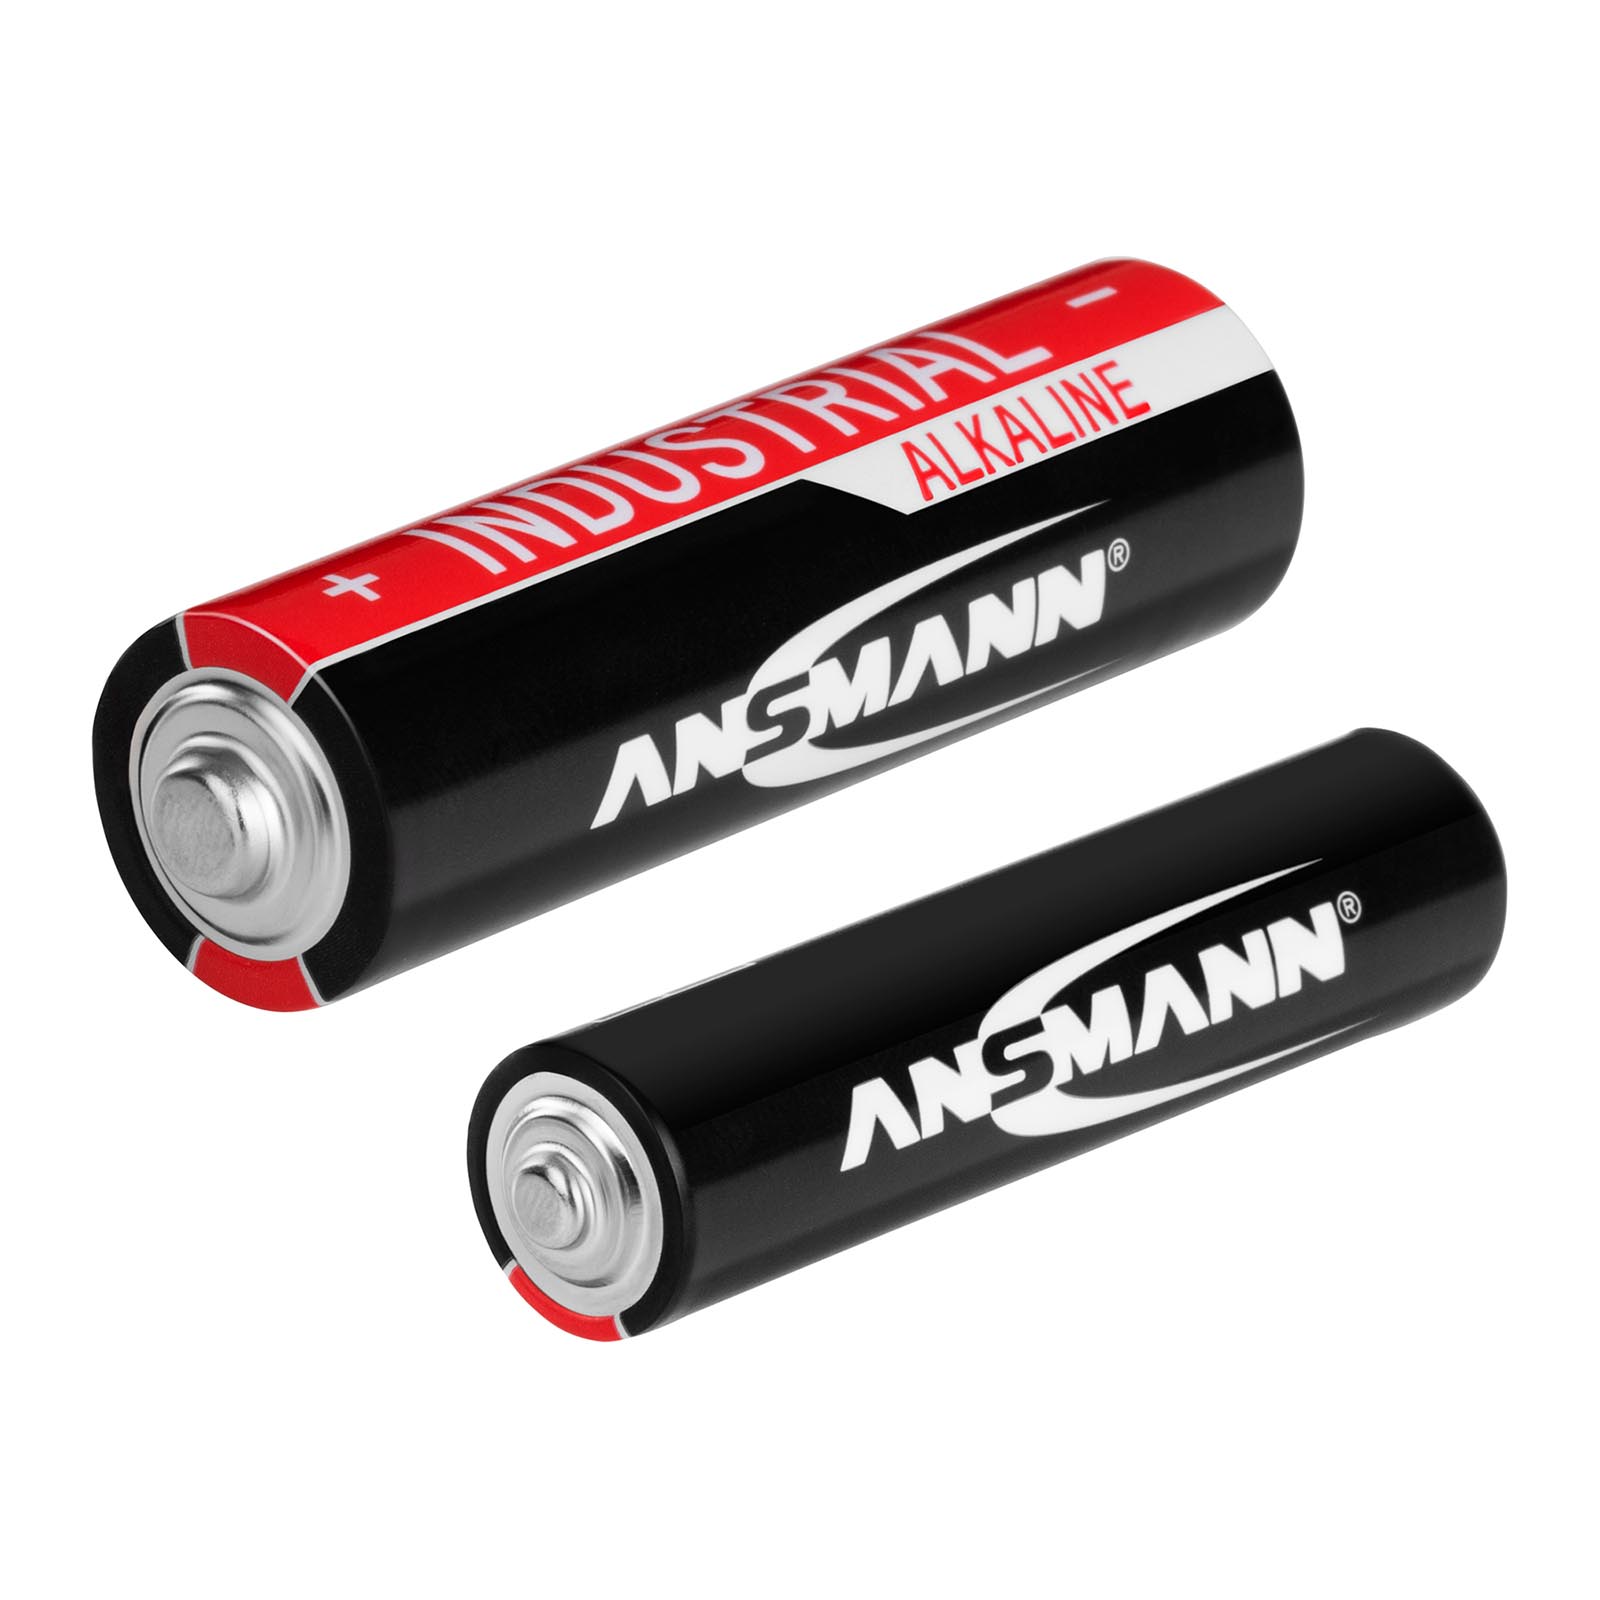 Zestaw Baterie przemysłowe - alkaliczne - AAA LR03 - 100 szt. + AA LR06 - 100 szt.